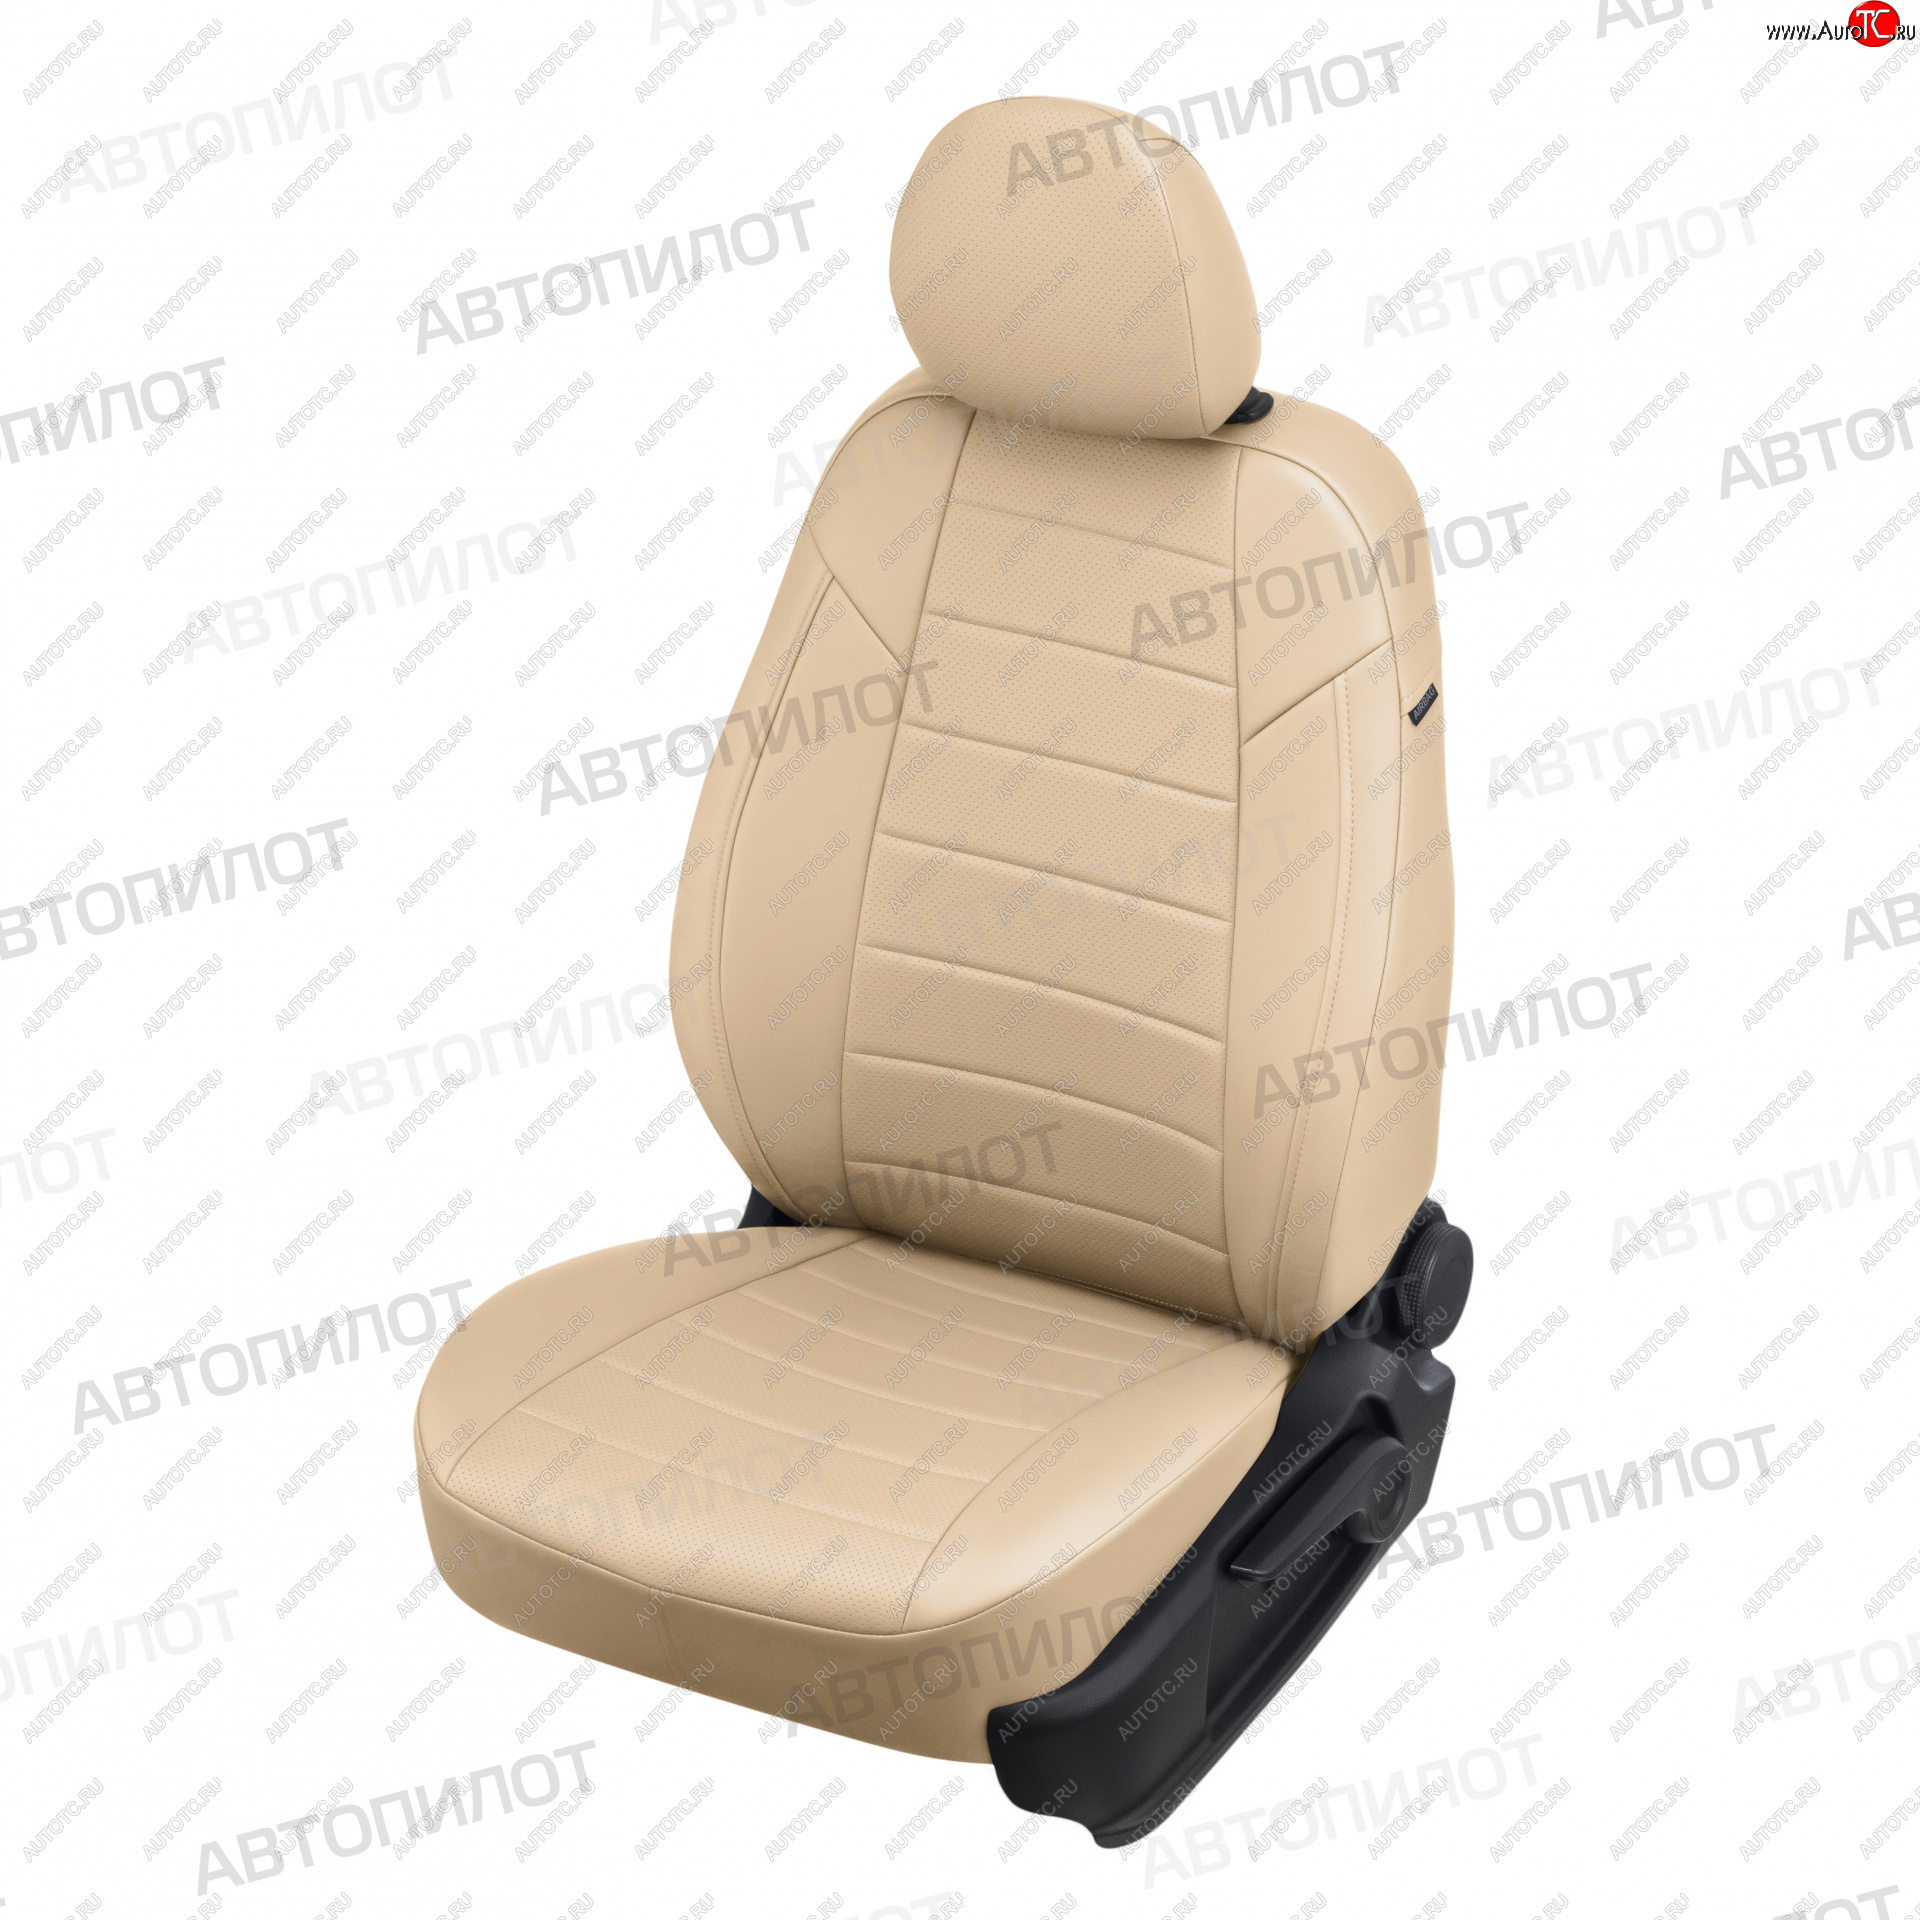 13 449 р. Чехлы сидений (экокожа) Автопилот  Hyundai Santa Fe  1 (2000-2012) (бежевый)